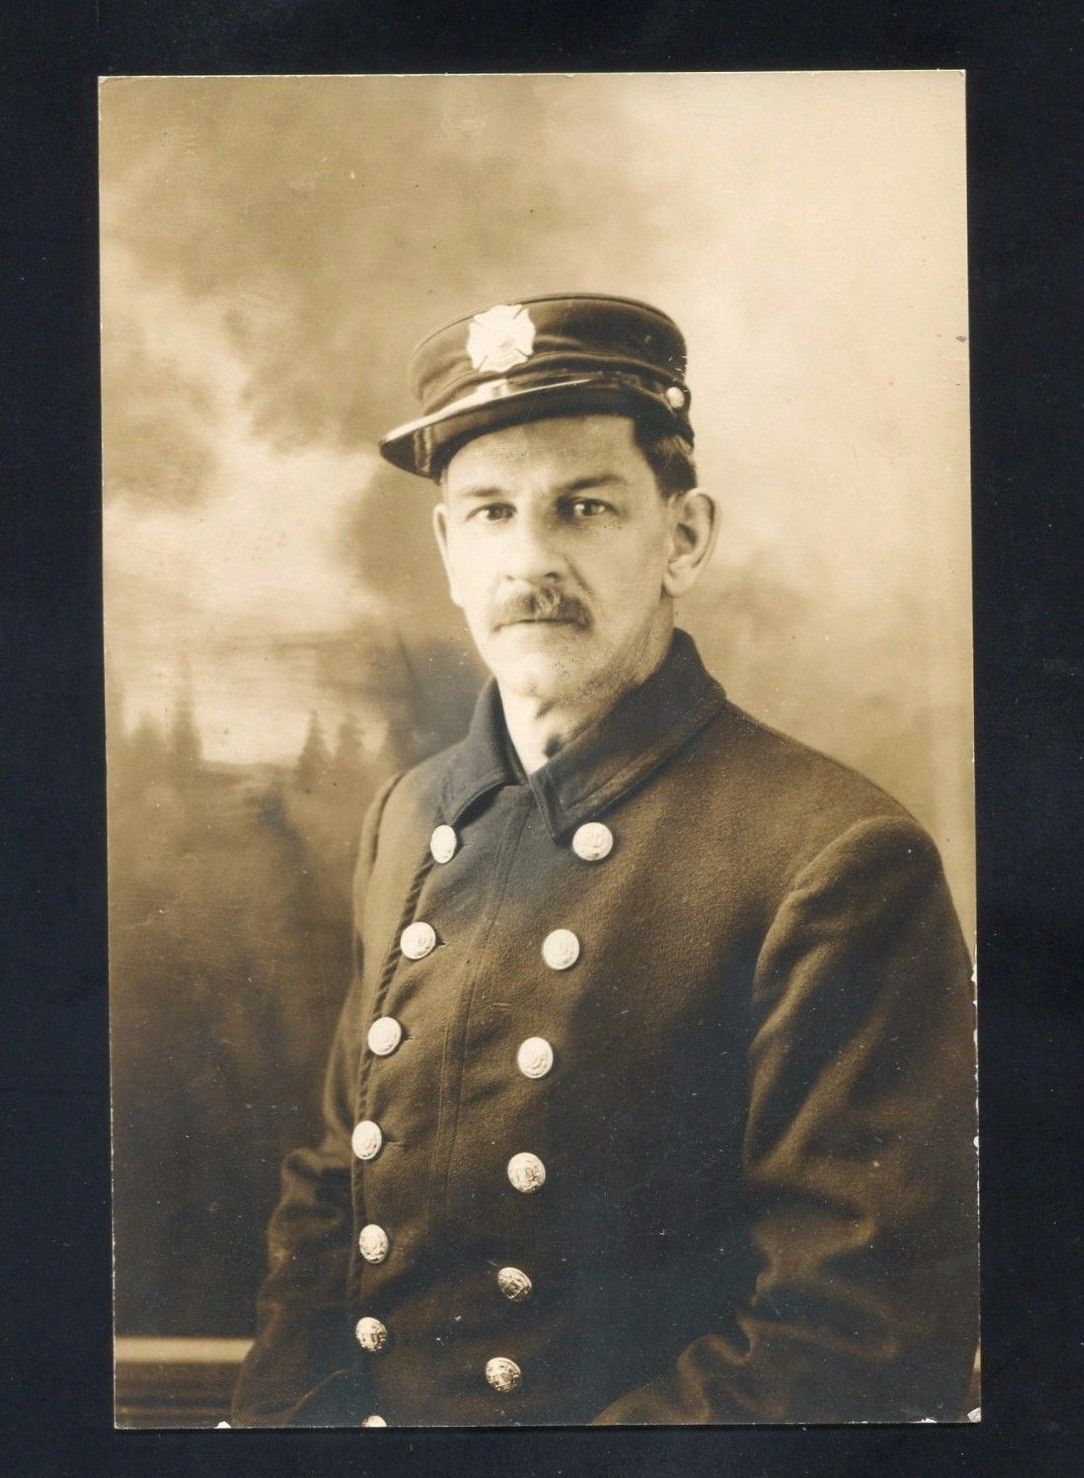 Burlington or Atlantic City - Cobbs Studios - Portrait of an unidentified fireman - c 1910